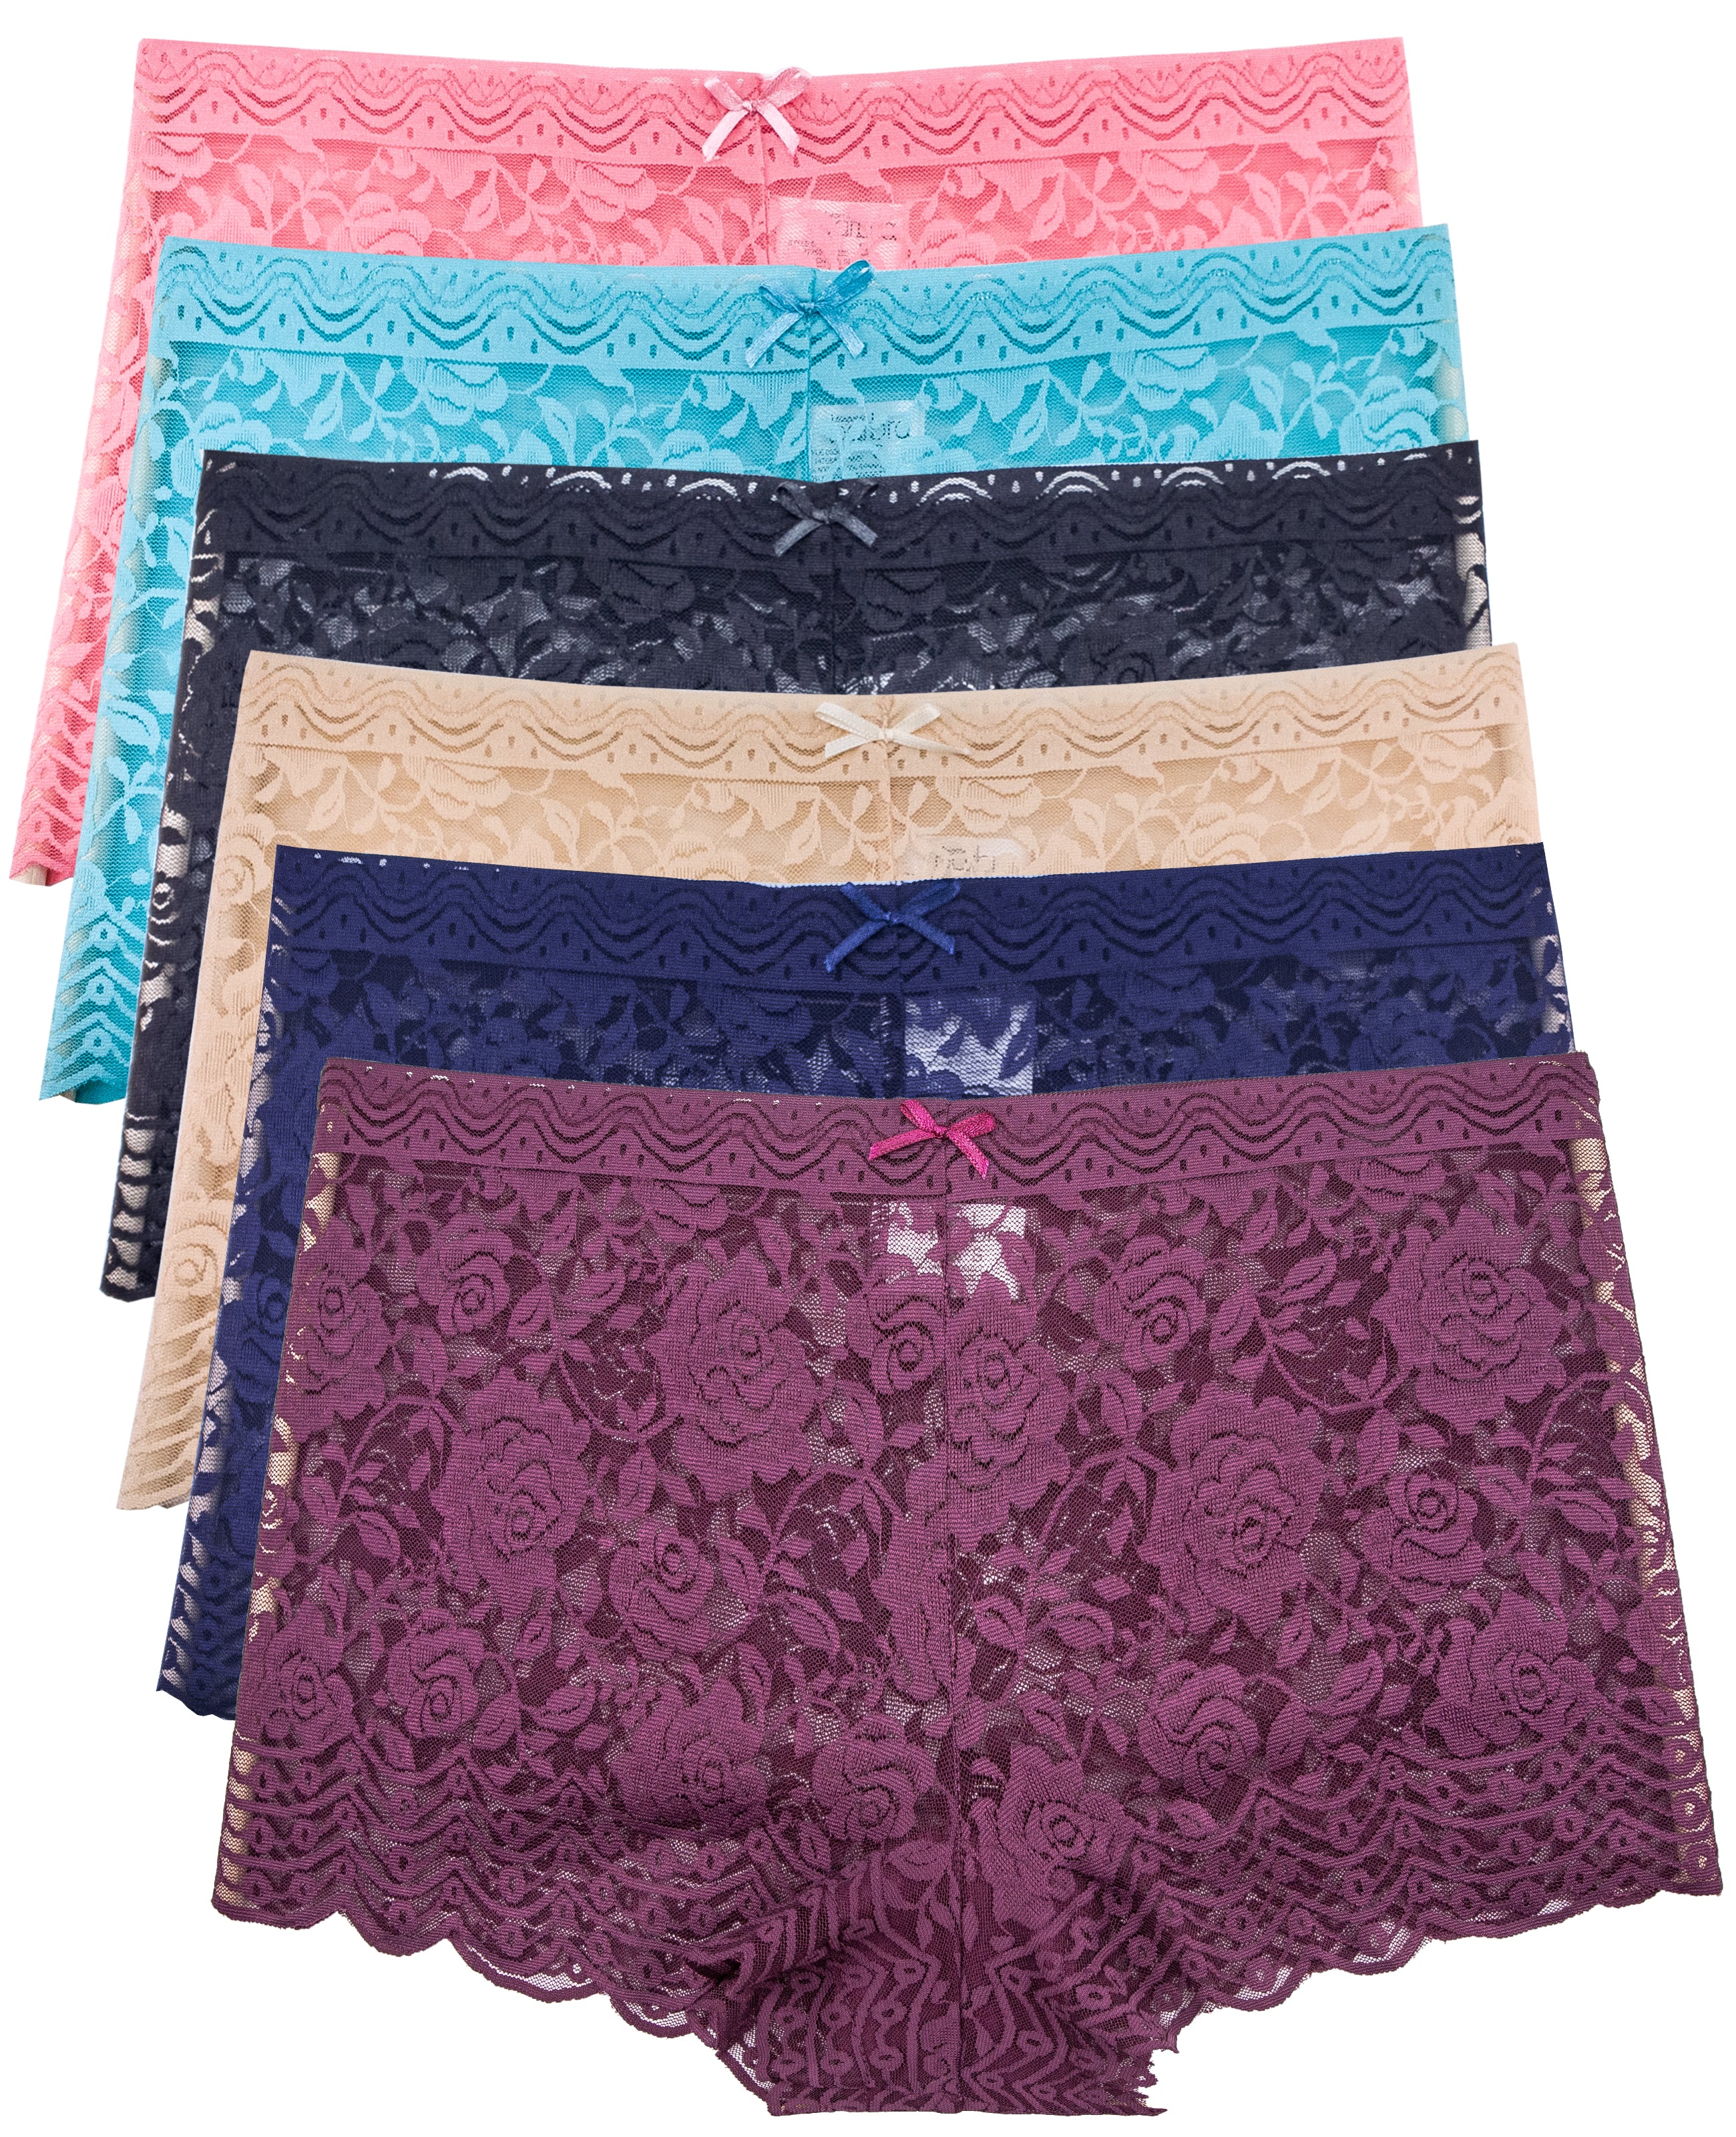 Plus Size Lace Boyshort Panties (Multi-Pack) – B2BODY - Formerly